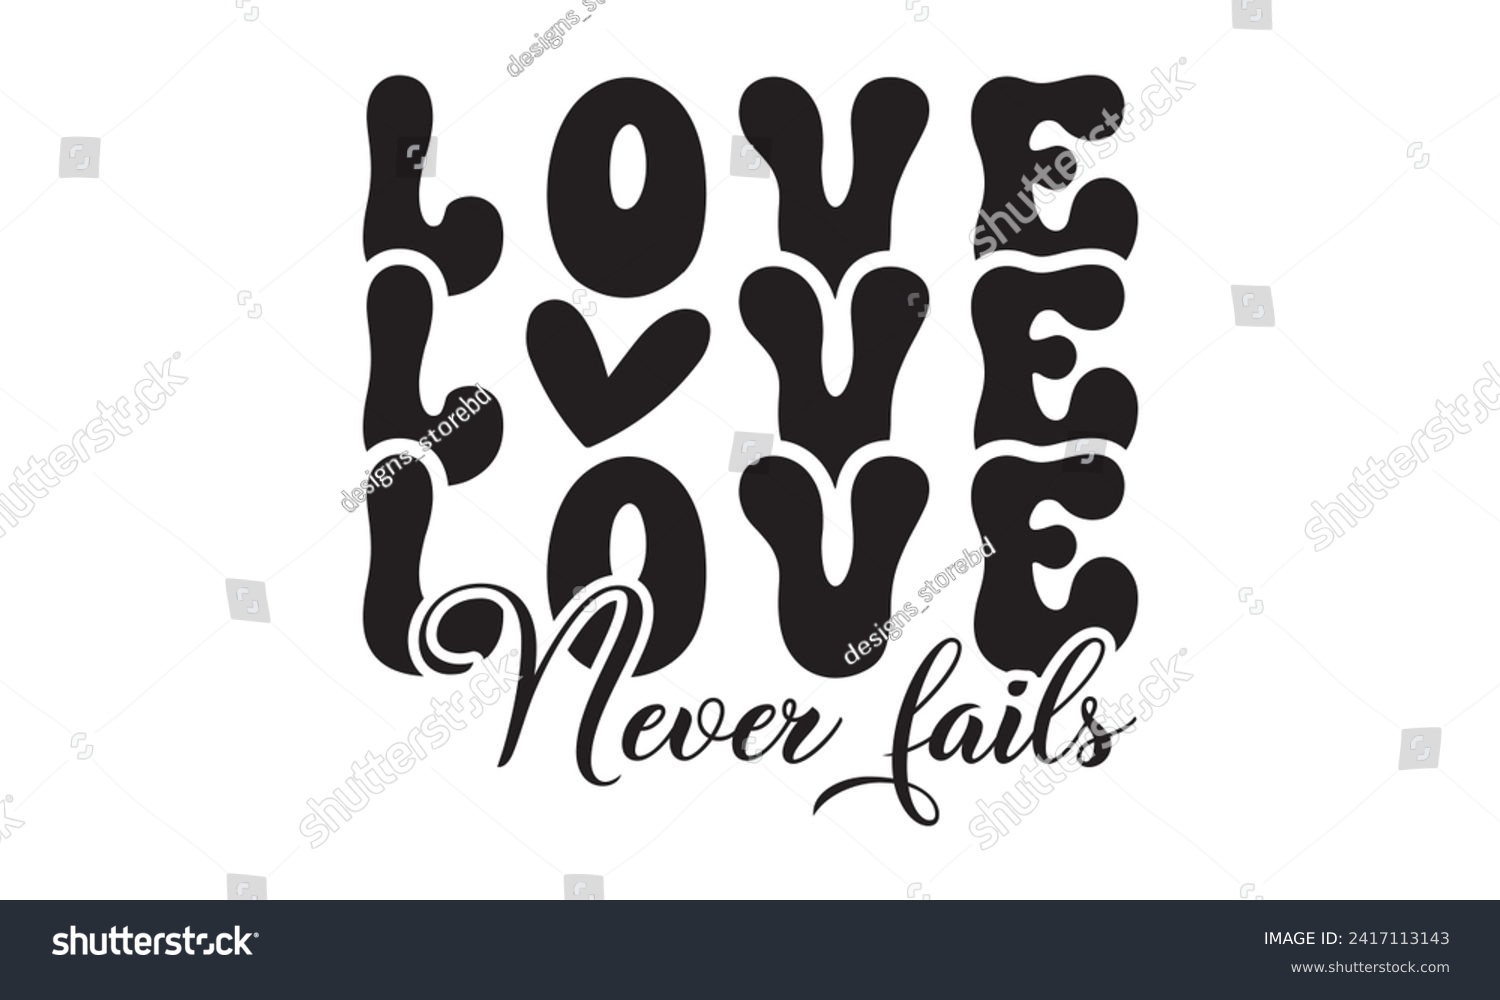 SVG of Love never fails,christian,jesus,Jesus Christian t-shirt design Bundle,Retro christian,funny christian,Printable Vector Illustration,Holiday,Cut Files Cricut,Silhouette,png svg